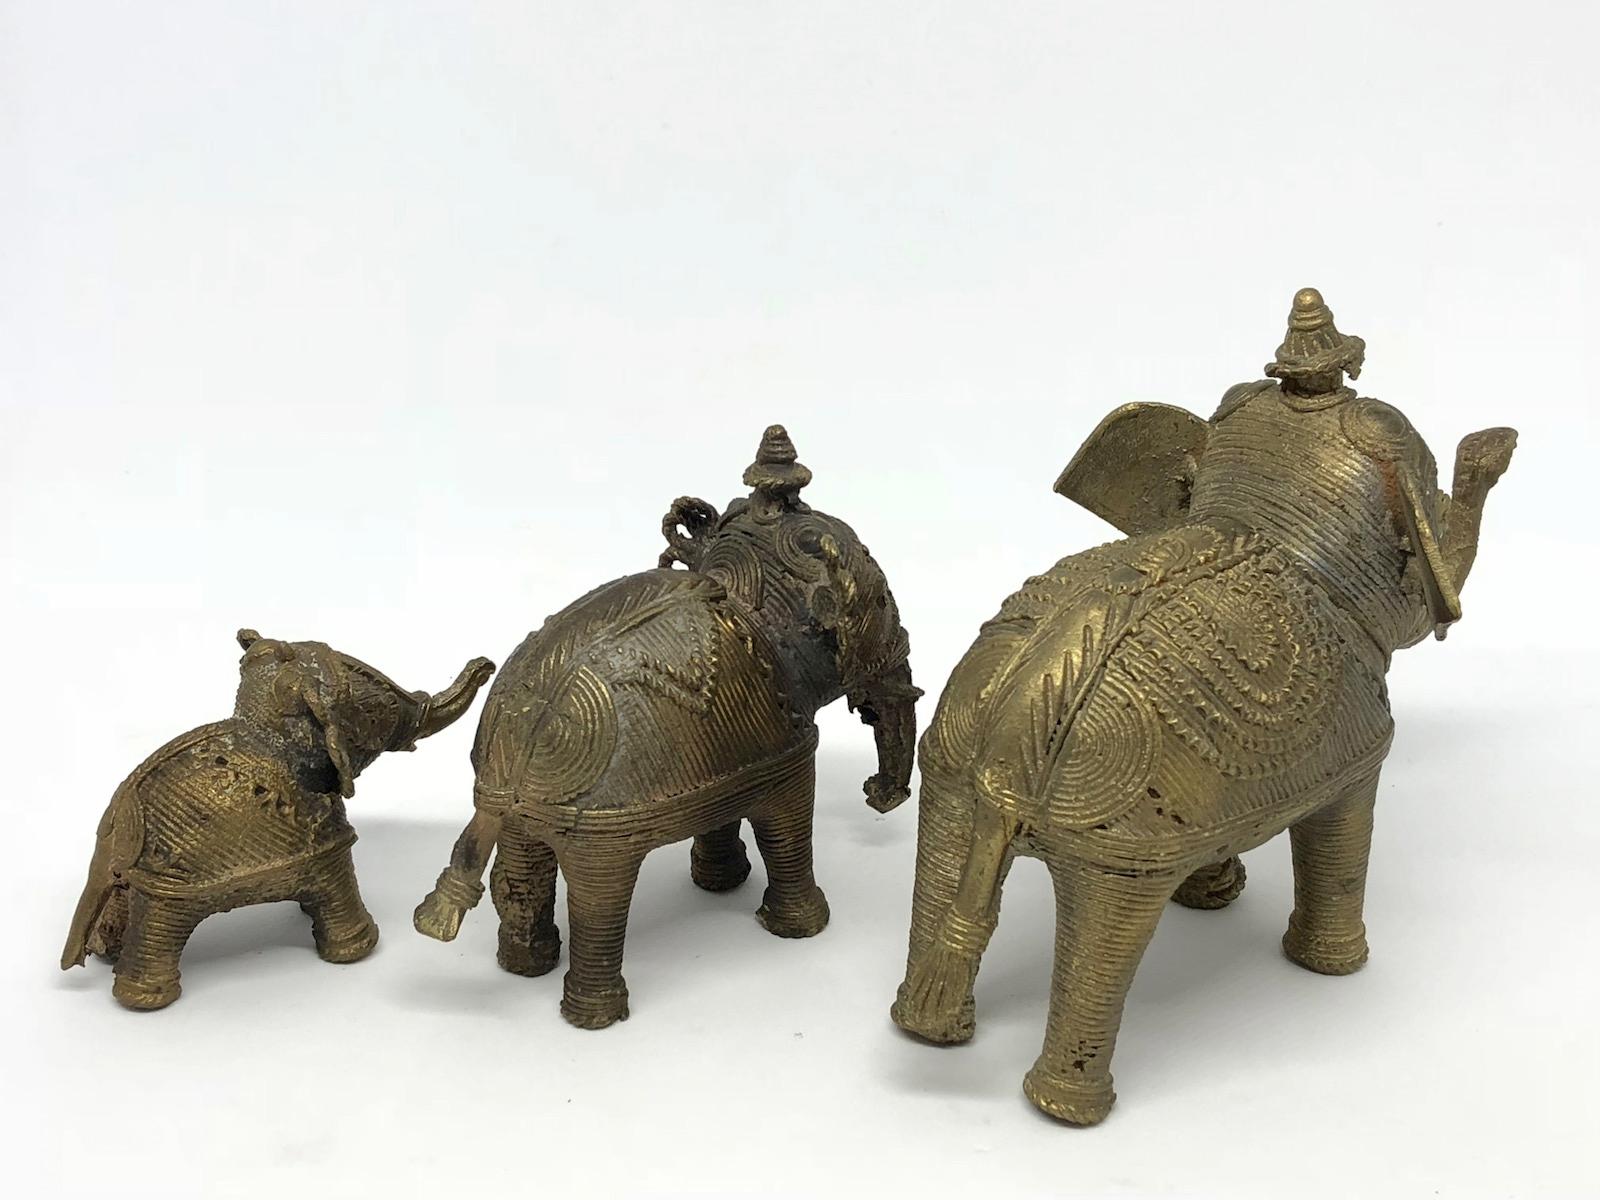 Folk Art Lot of Three Asian Elephant Brass Sculpture Figures Vintage, 1950s